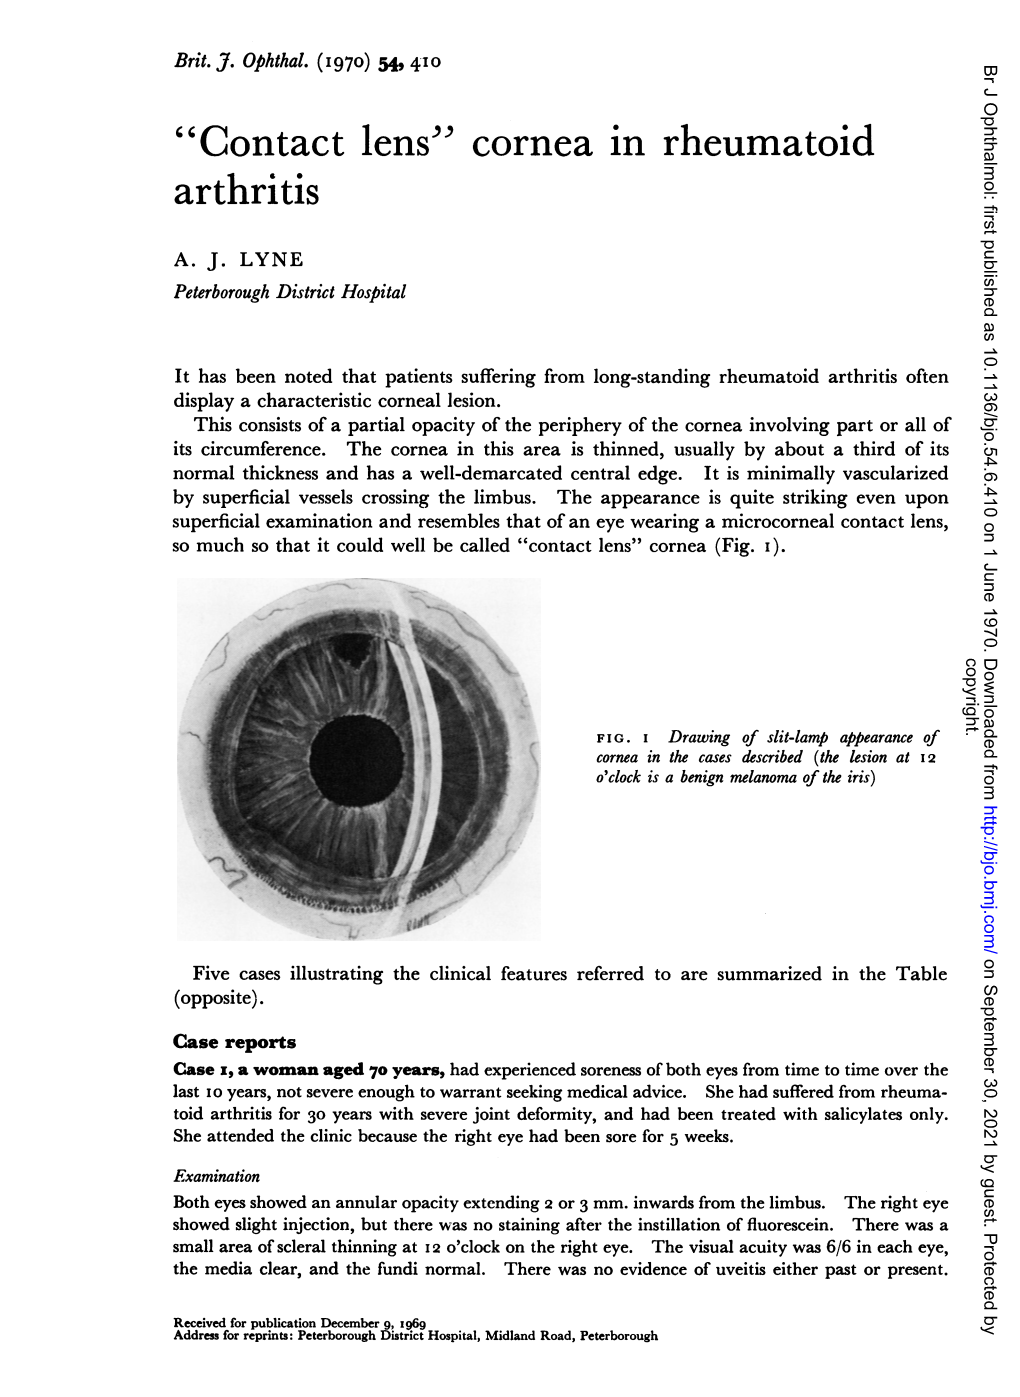 "Contact Lens" Cornea in Rheumatoid Arthritis